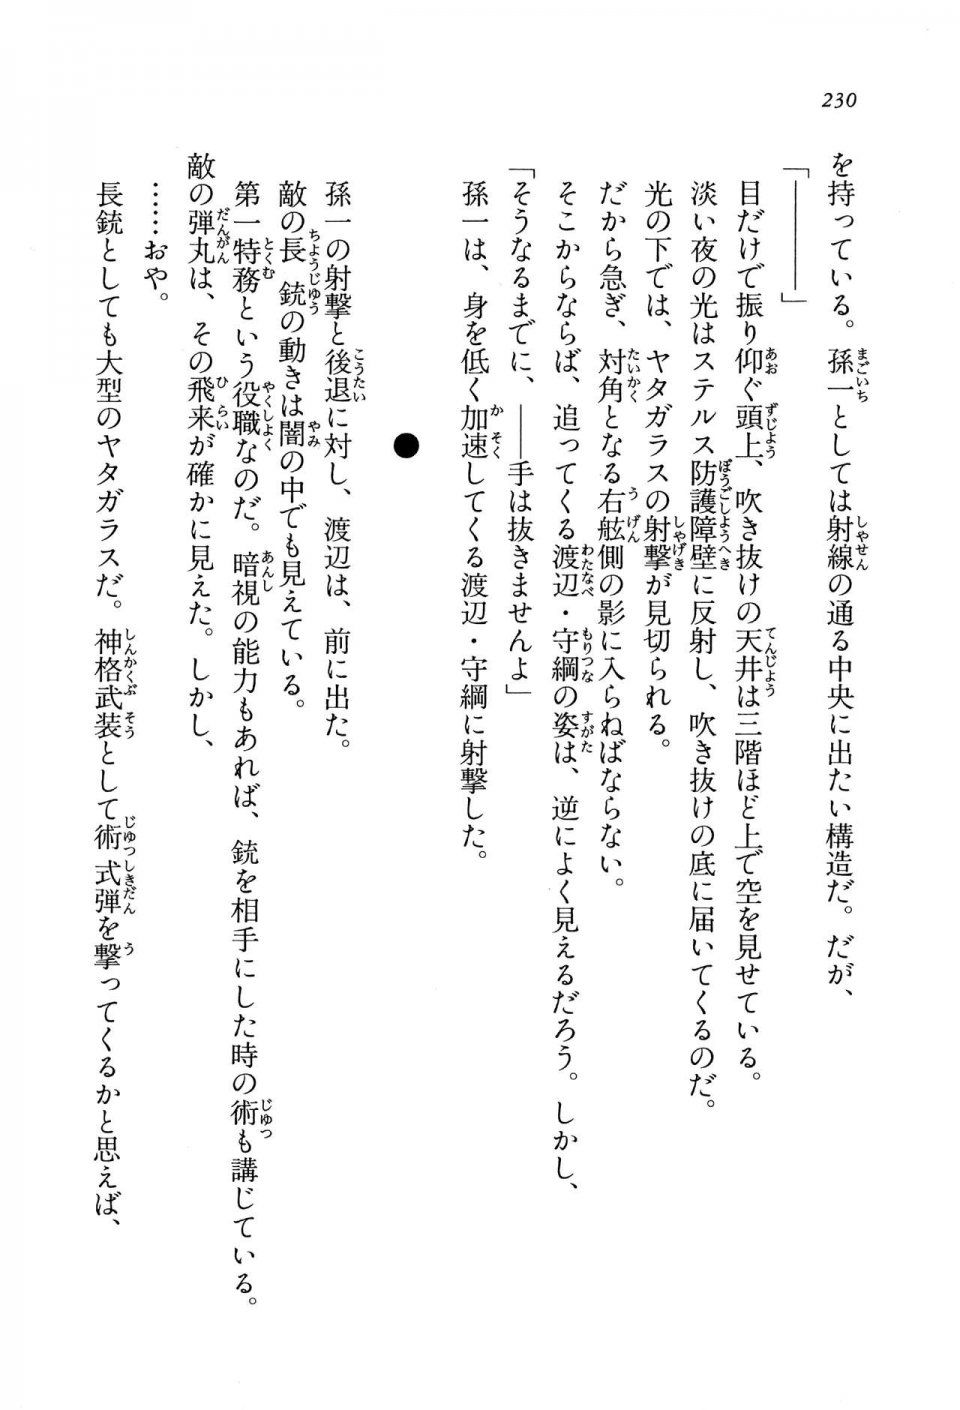 Kyoukai Senjou no Horizon BD Special Mininovel Vol 8(4B) - Photo #234